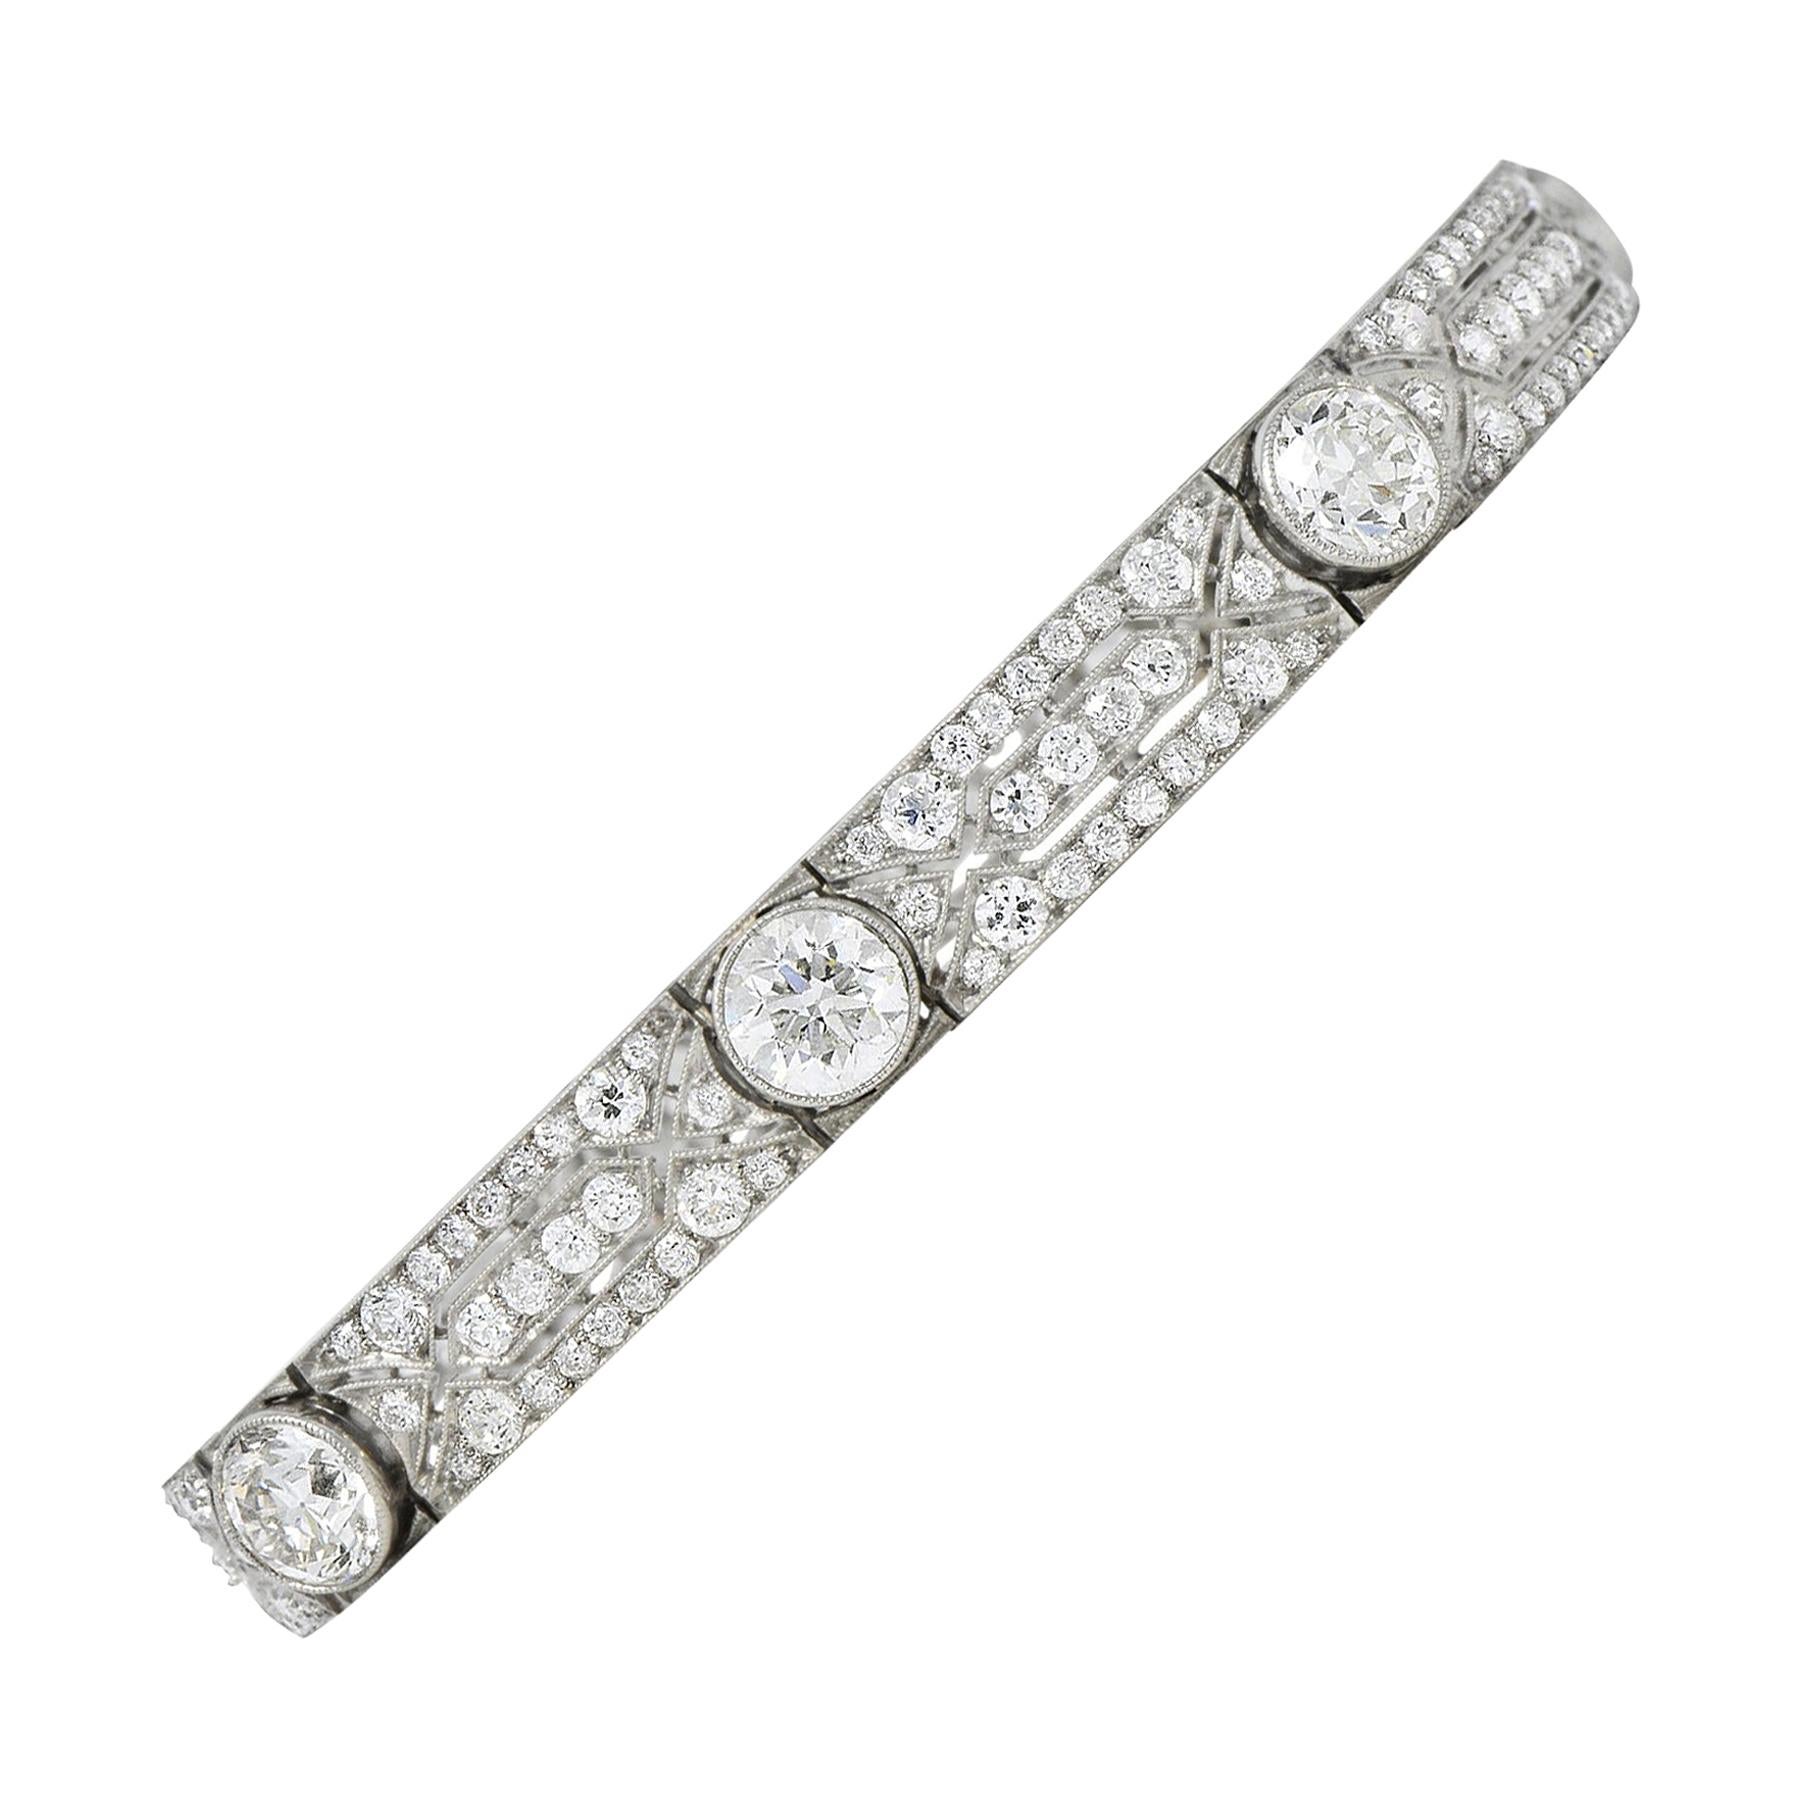 Exquisite Tiffany & Co. Edwardian 11.21 Carat Diamond Platinum Bracelet